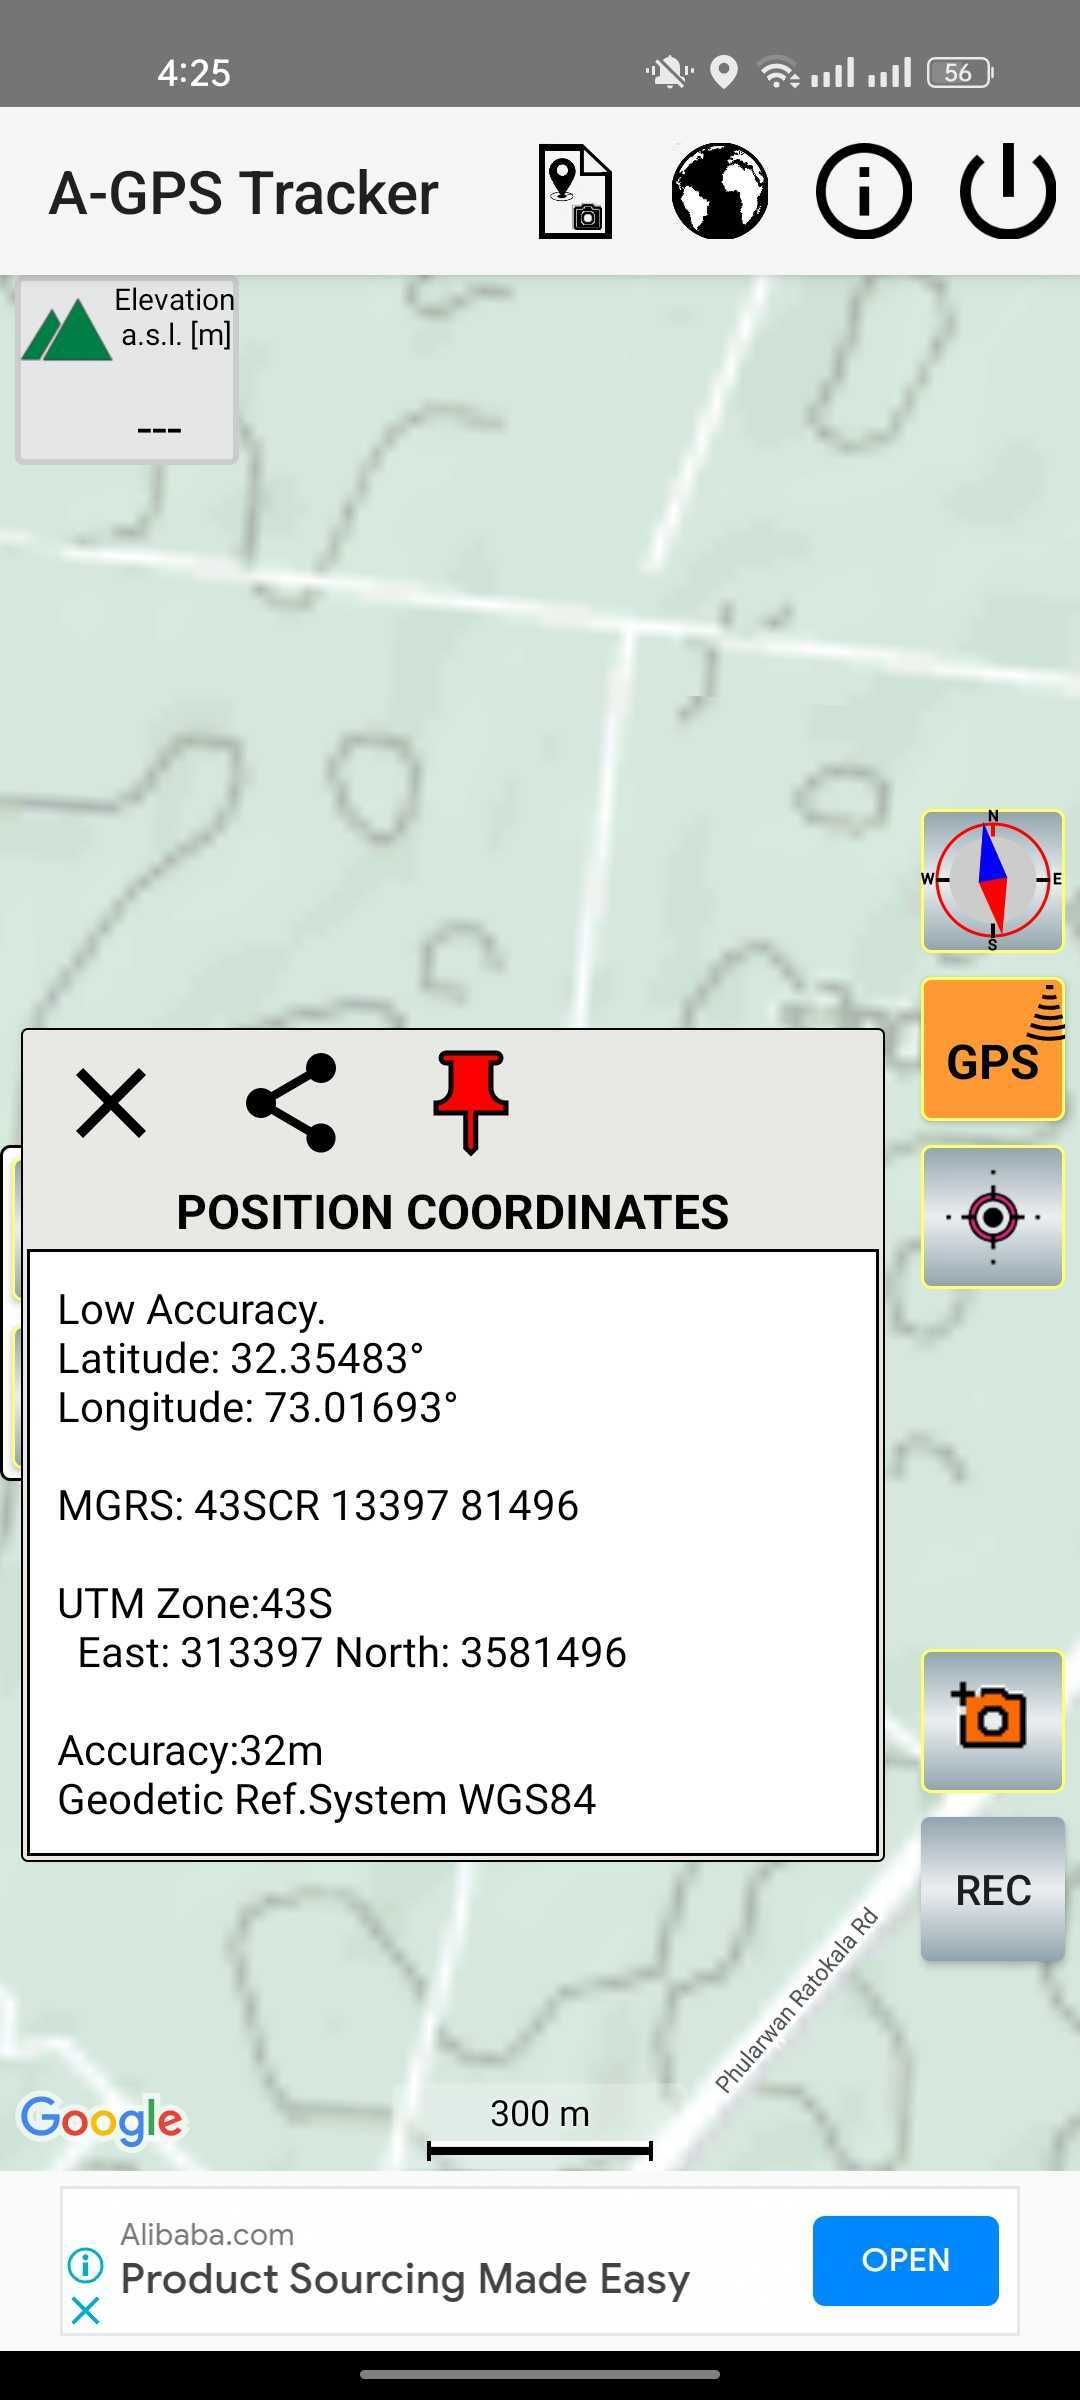 Position coordinates in the locator